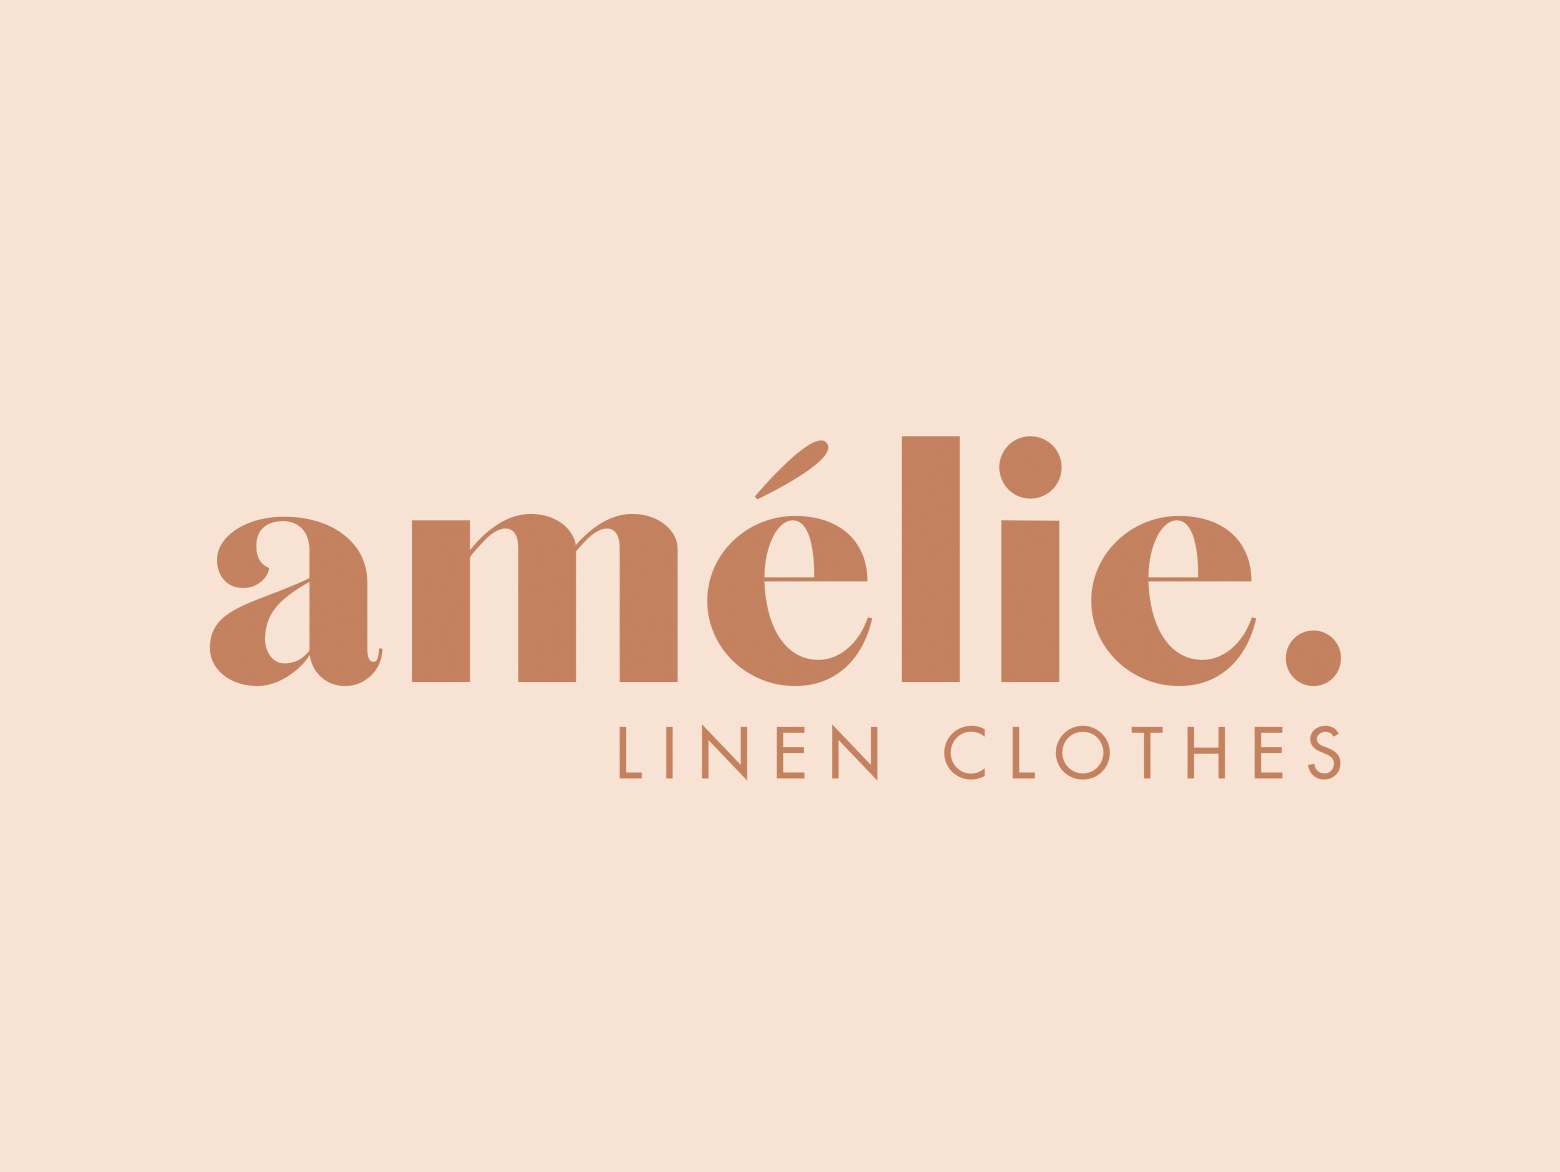 Amélie Linen Clothes by Jessica Rafael on Dribbble